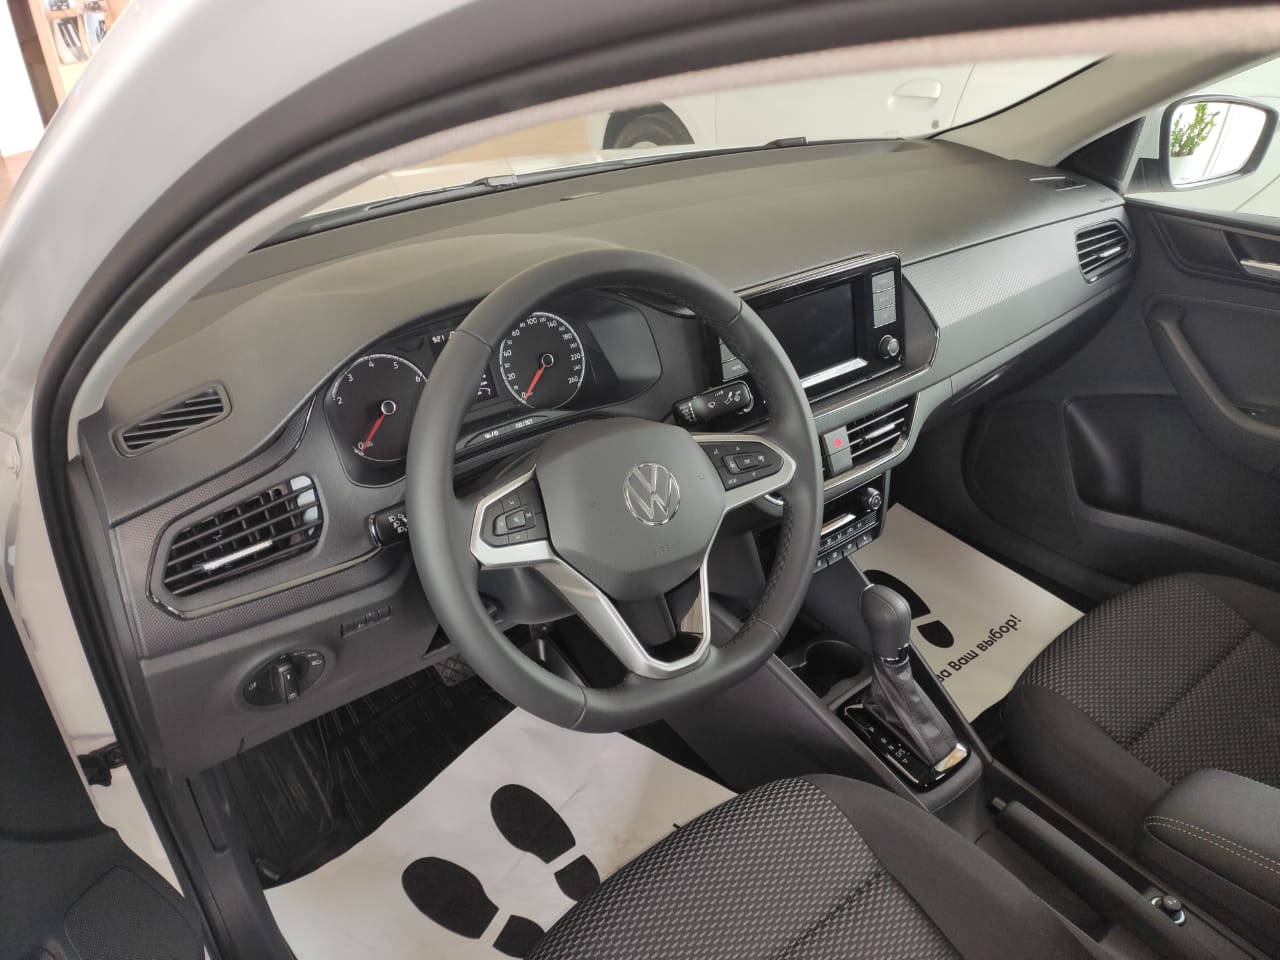 Volkswagen Polo лифтбек, 1.6 л., 16-кл., (110л.с.), 6АТ, Respect, Белый Pure, 2021